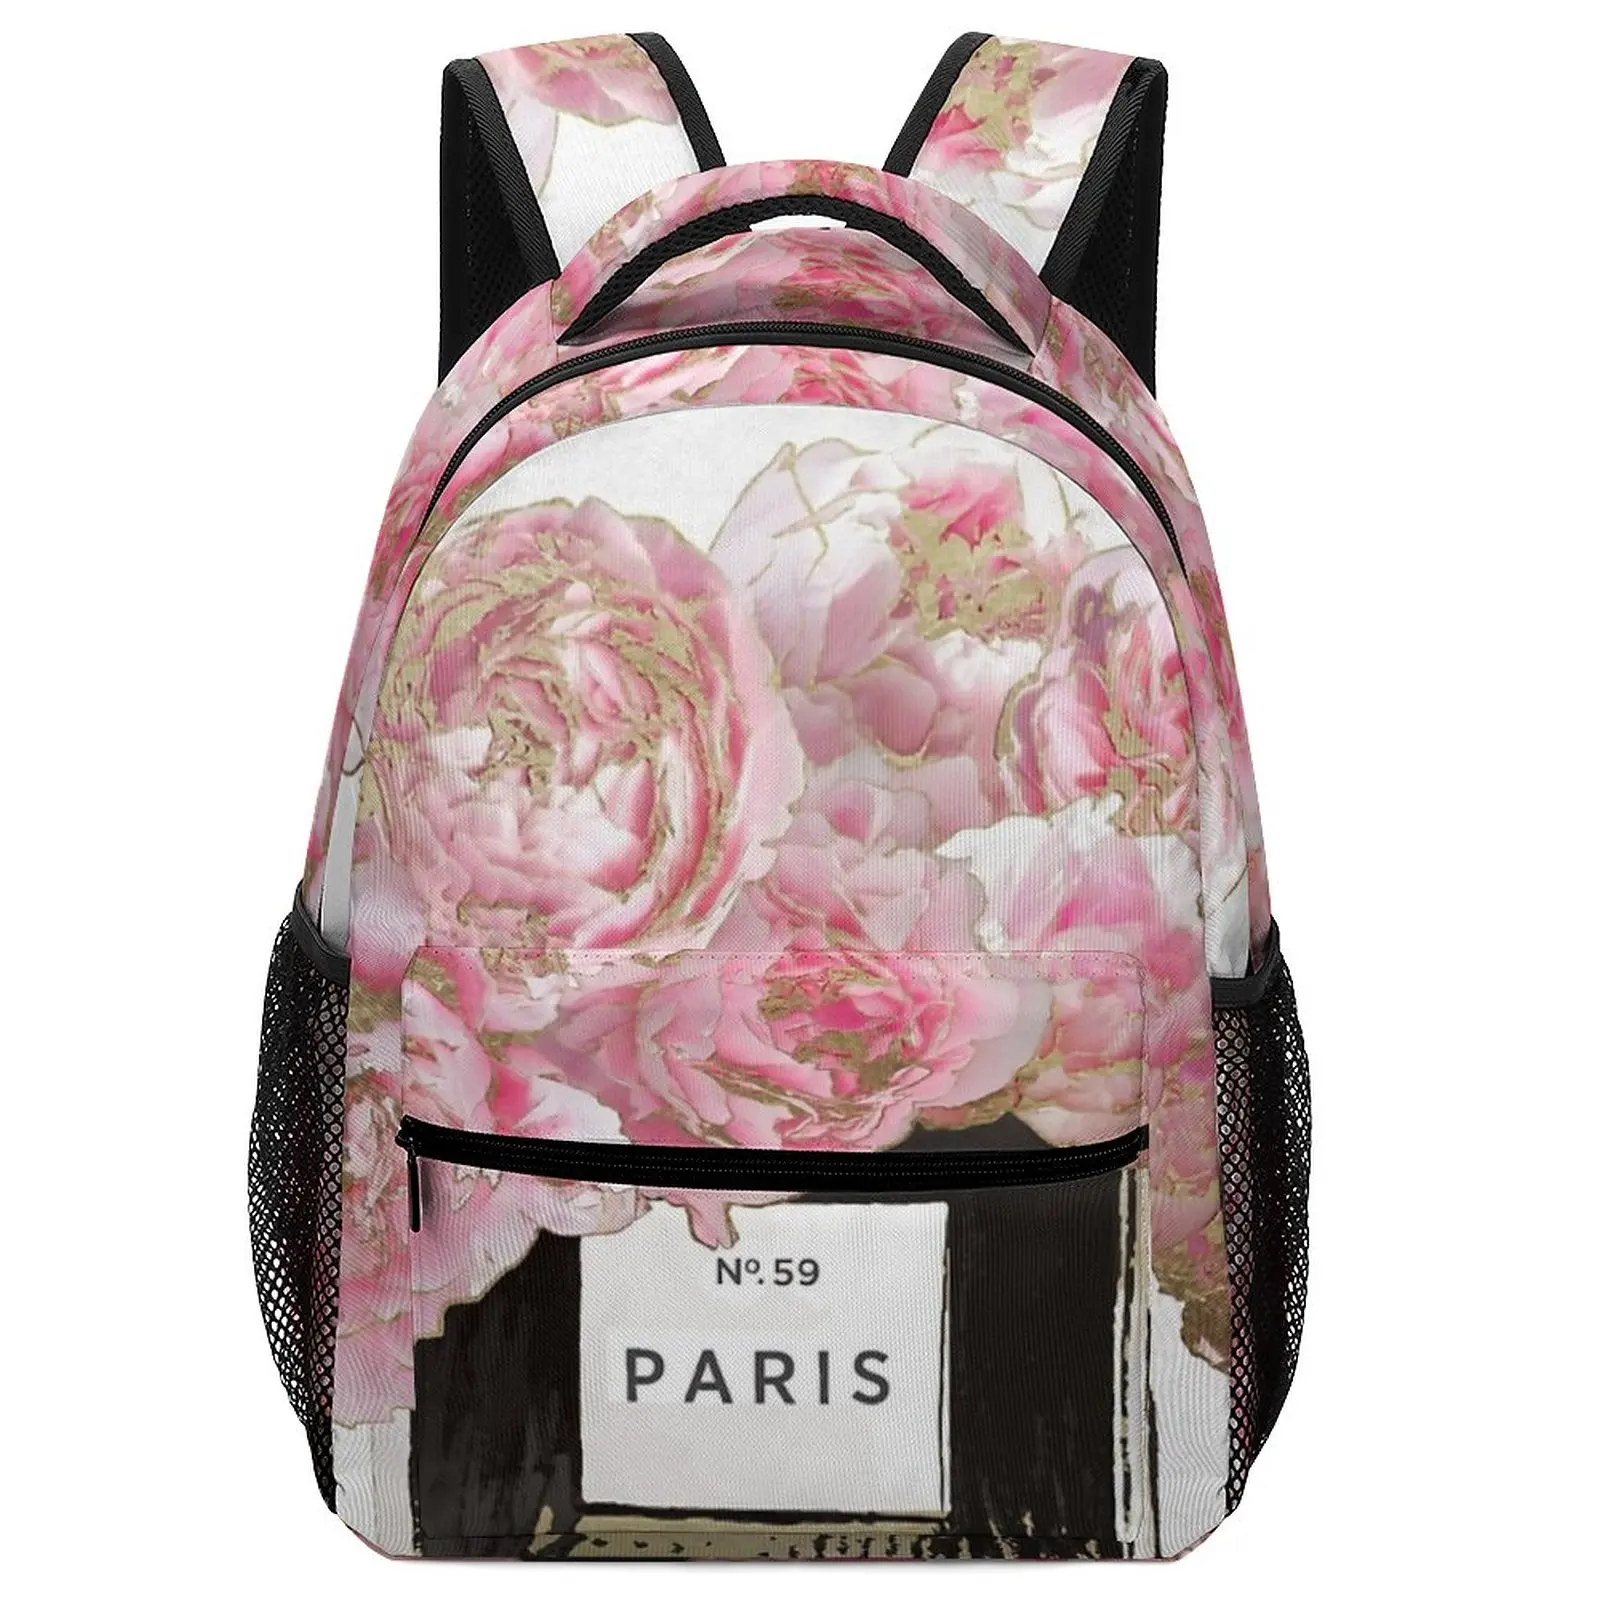 New Art Pink Scented Female Bag for Kids Girls Men School Bag Backpack Child Mother Name Customizable